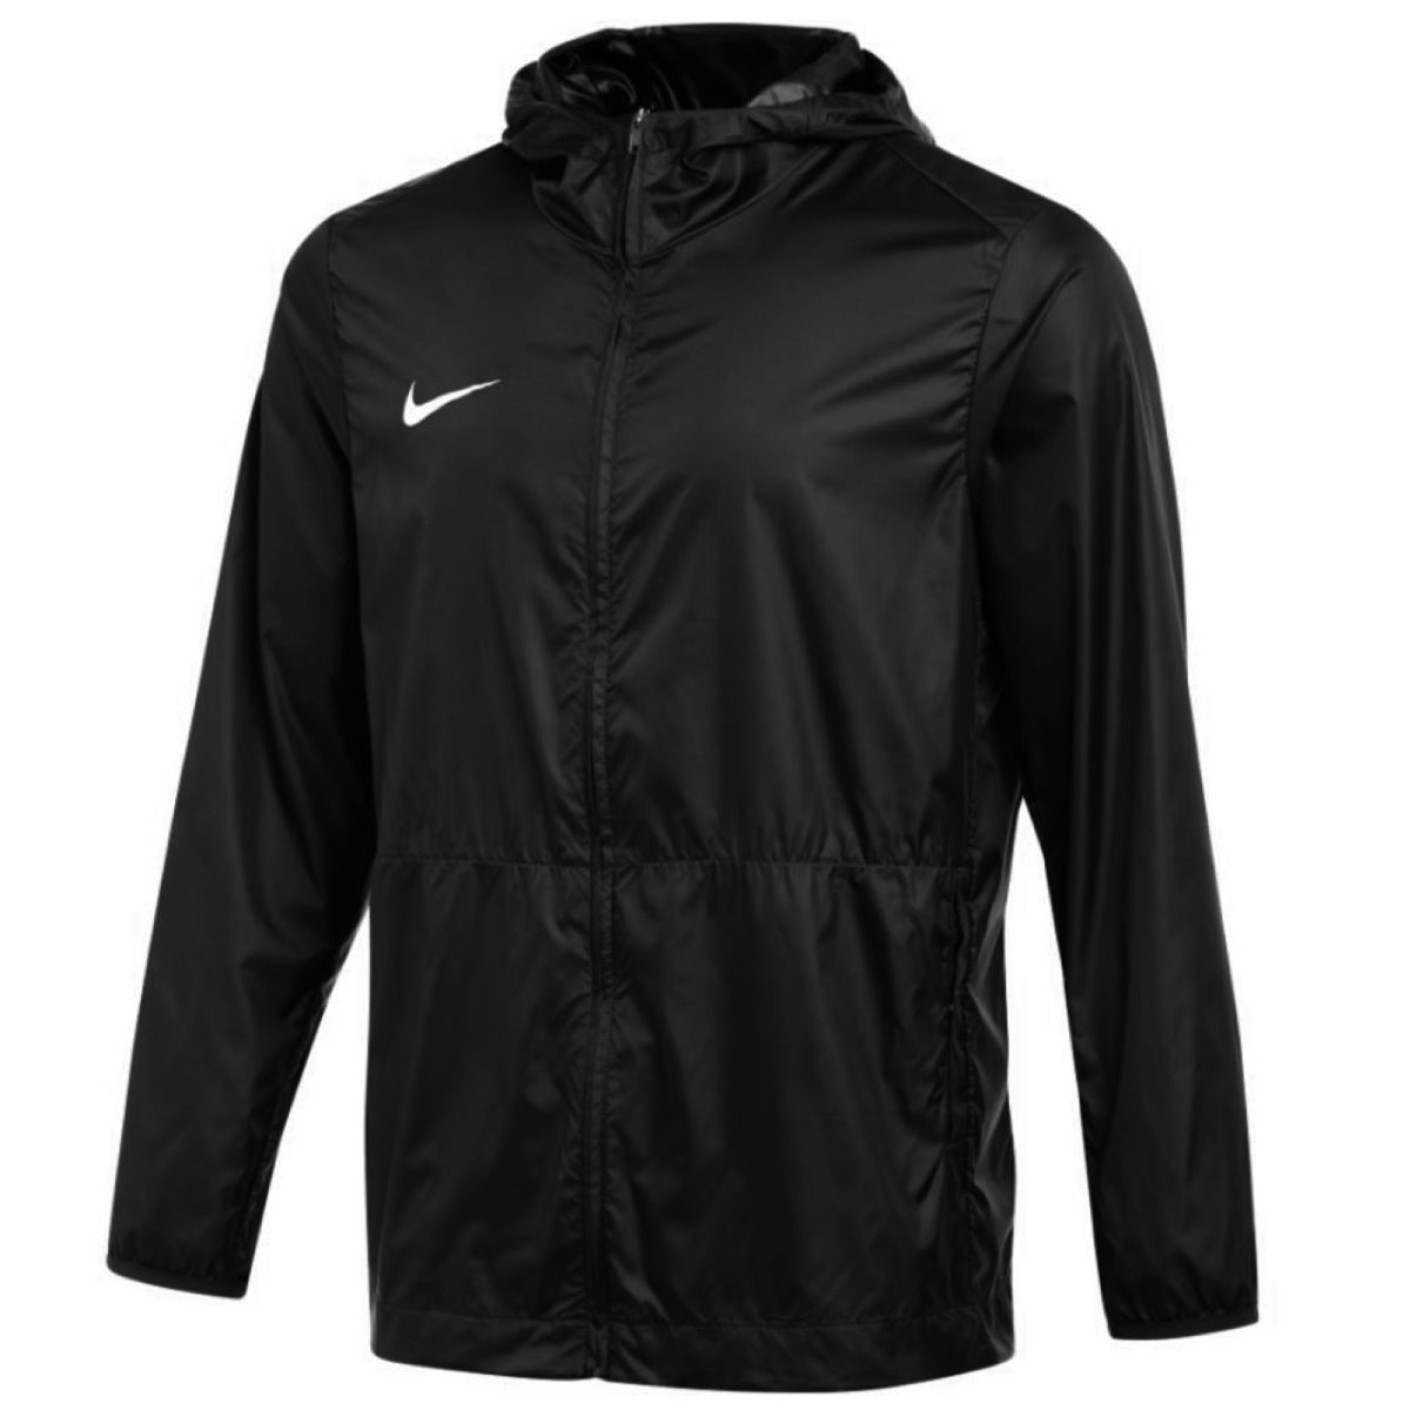 Nike Academy Pro 24 Storm-Fit Rain Jacket Black White